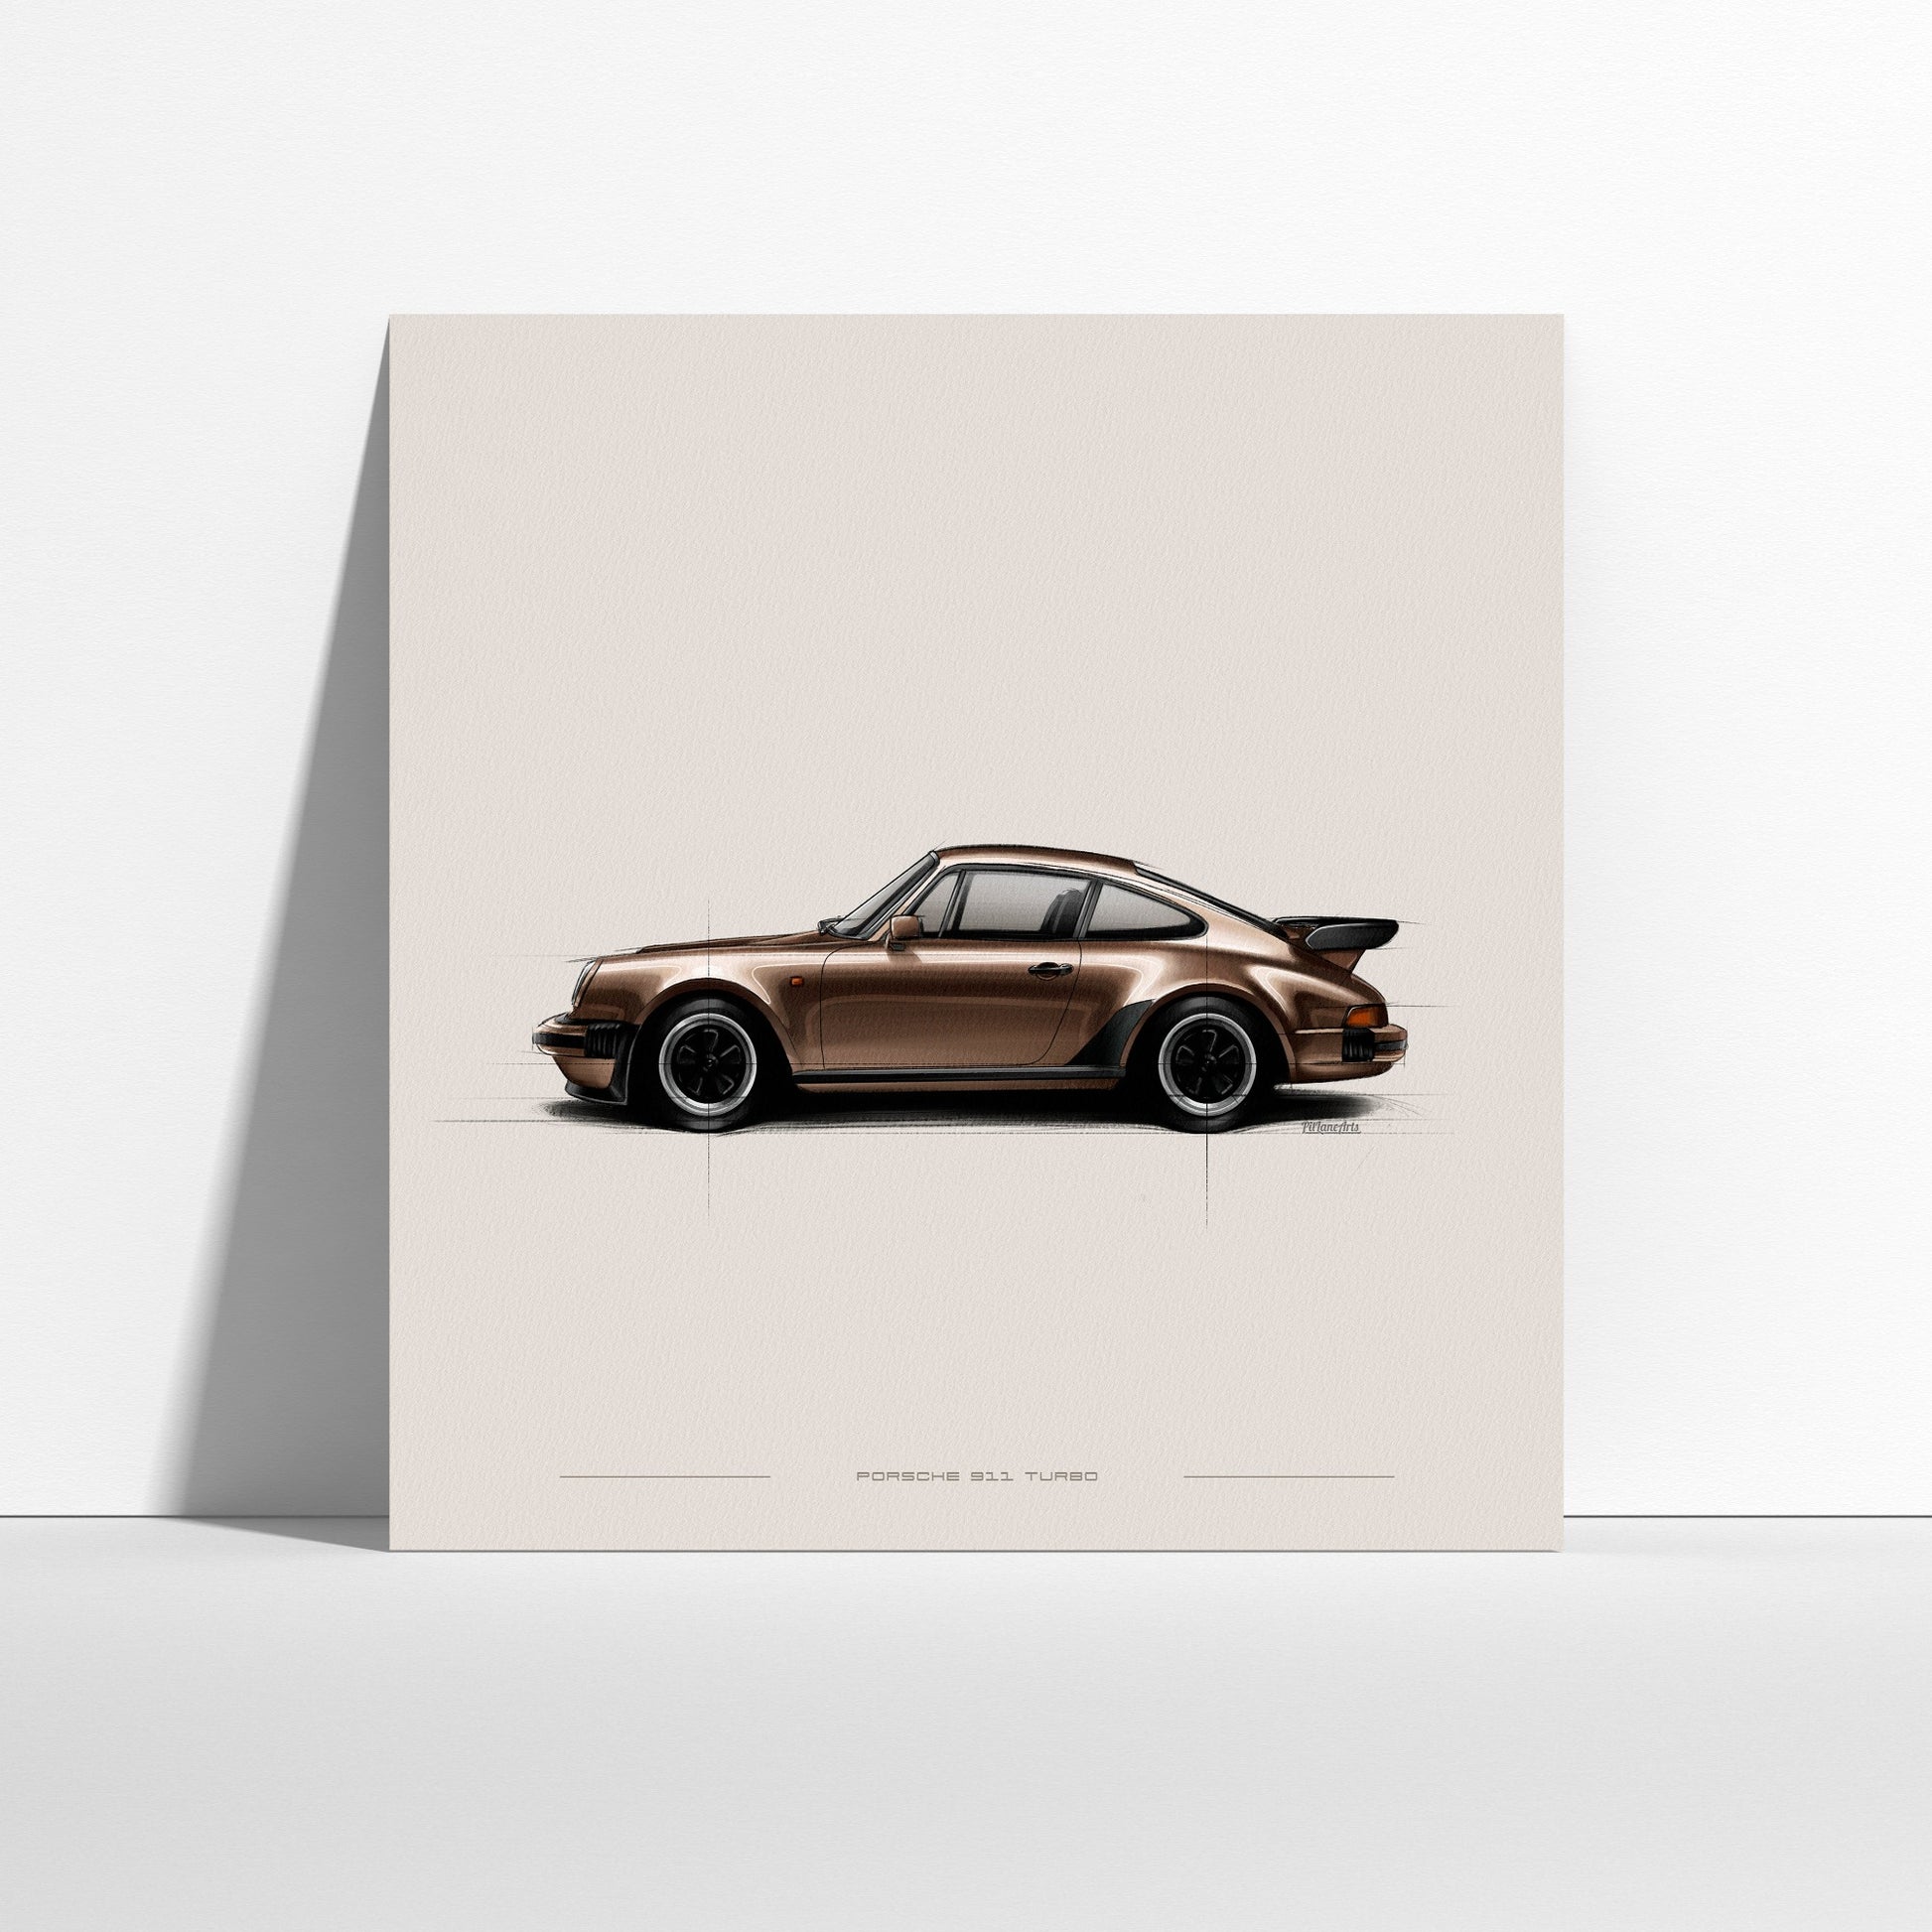 Porsche 911 Turbo illustration